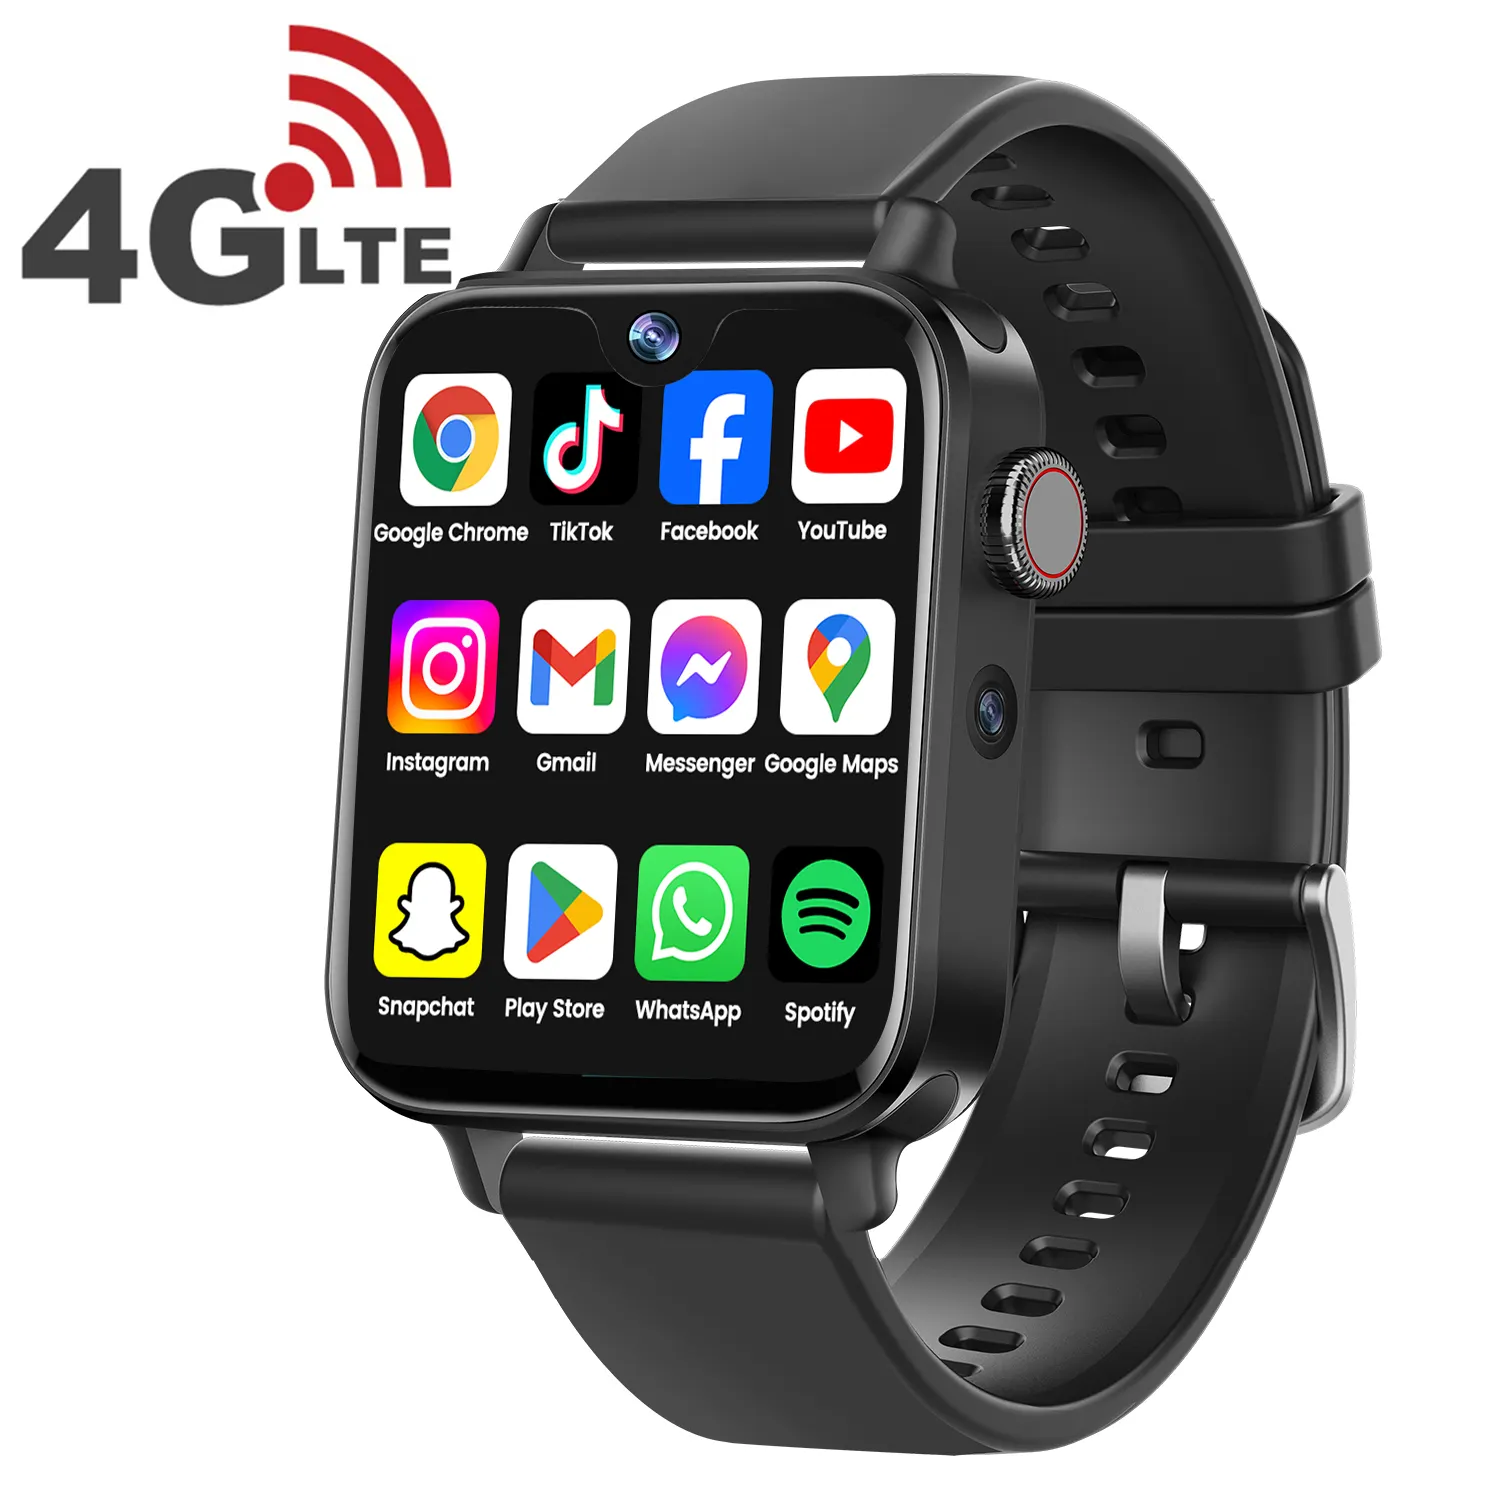 VALDUS 4G Androidโทรศัพท์หน้าจอสัมผัสAMOLED WIFI GPS Smartwatch 4Gทั้งหมดNetcom 500Wกล้องจดจําใบหน้าสมาร์ทนาฬิกาI1 Pro